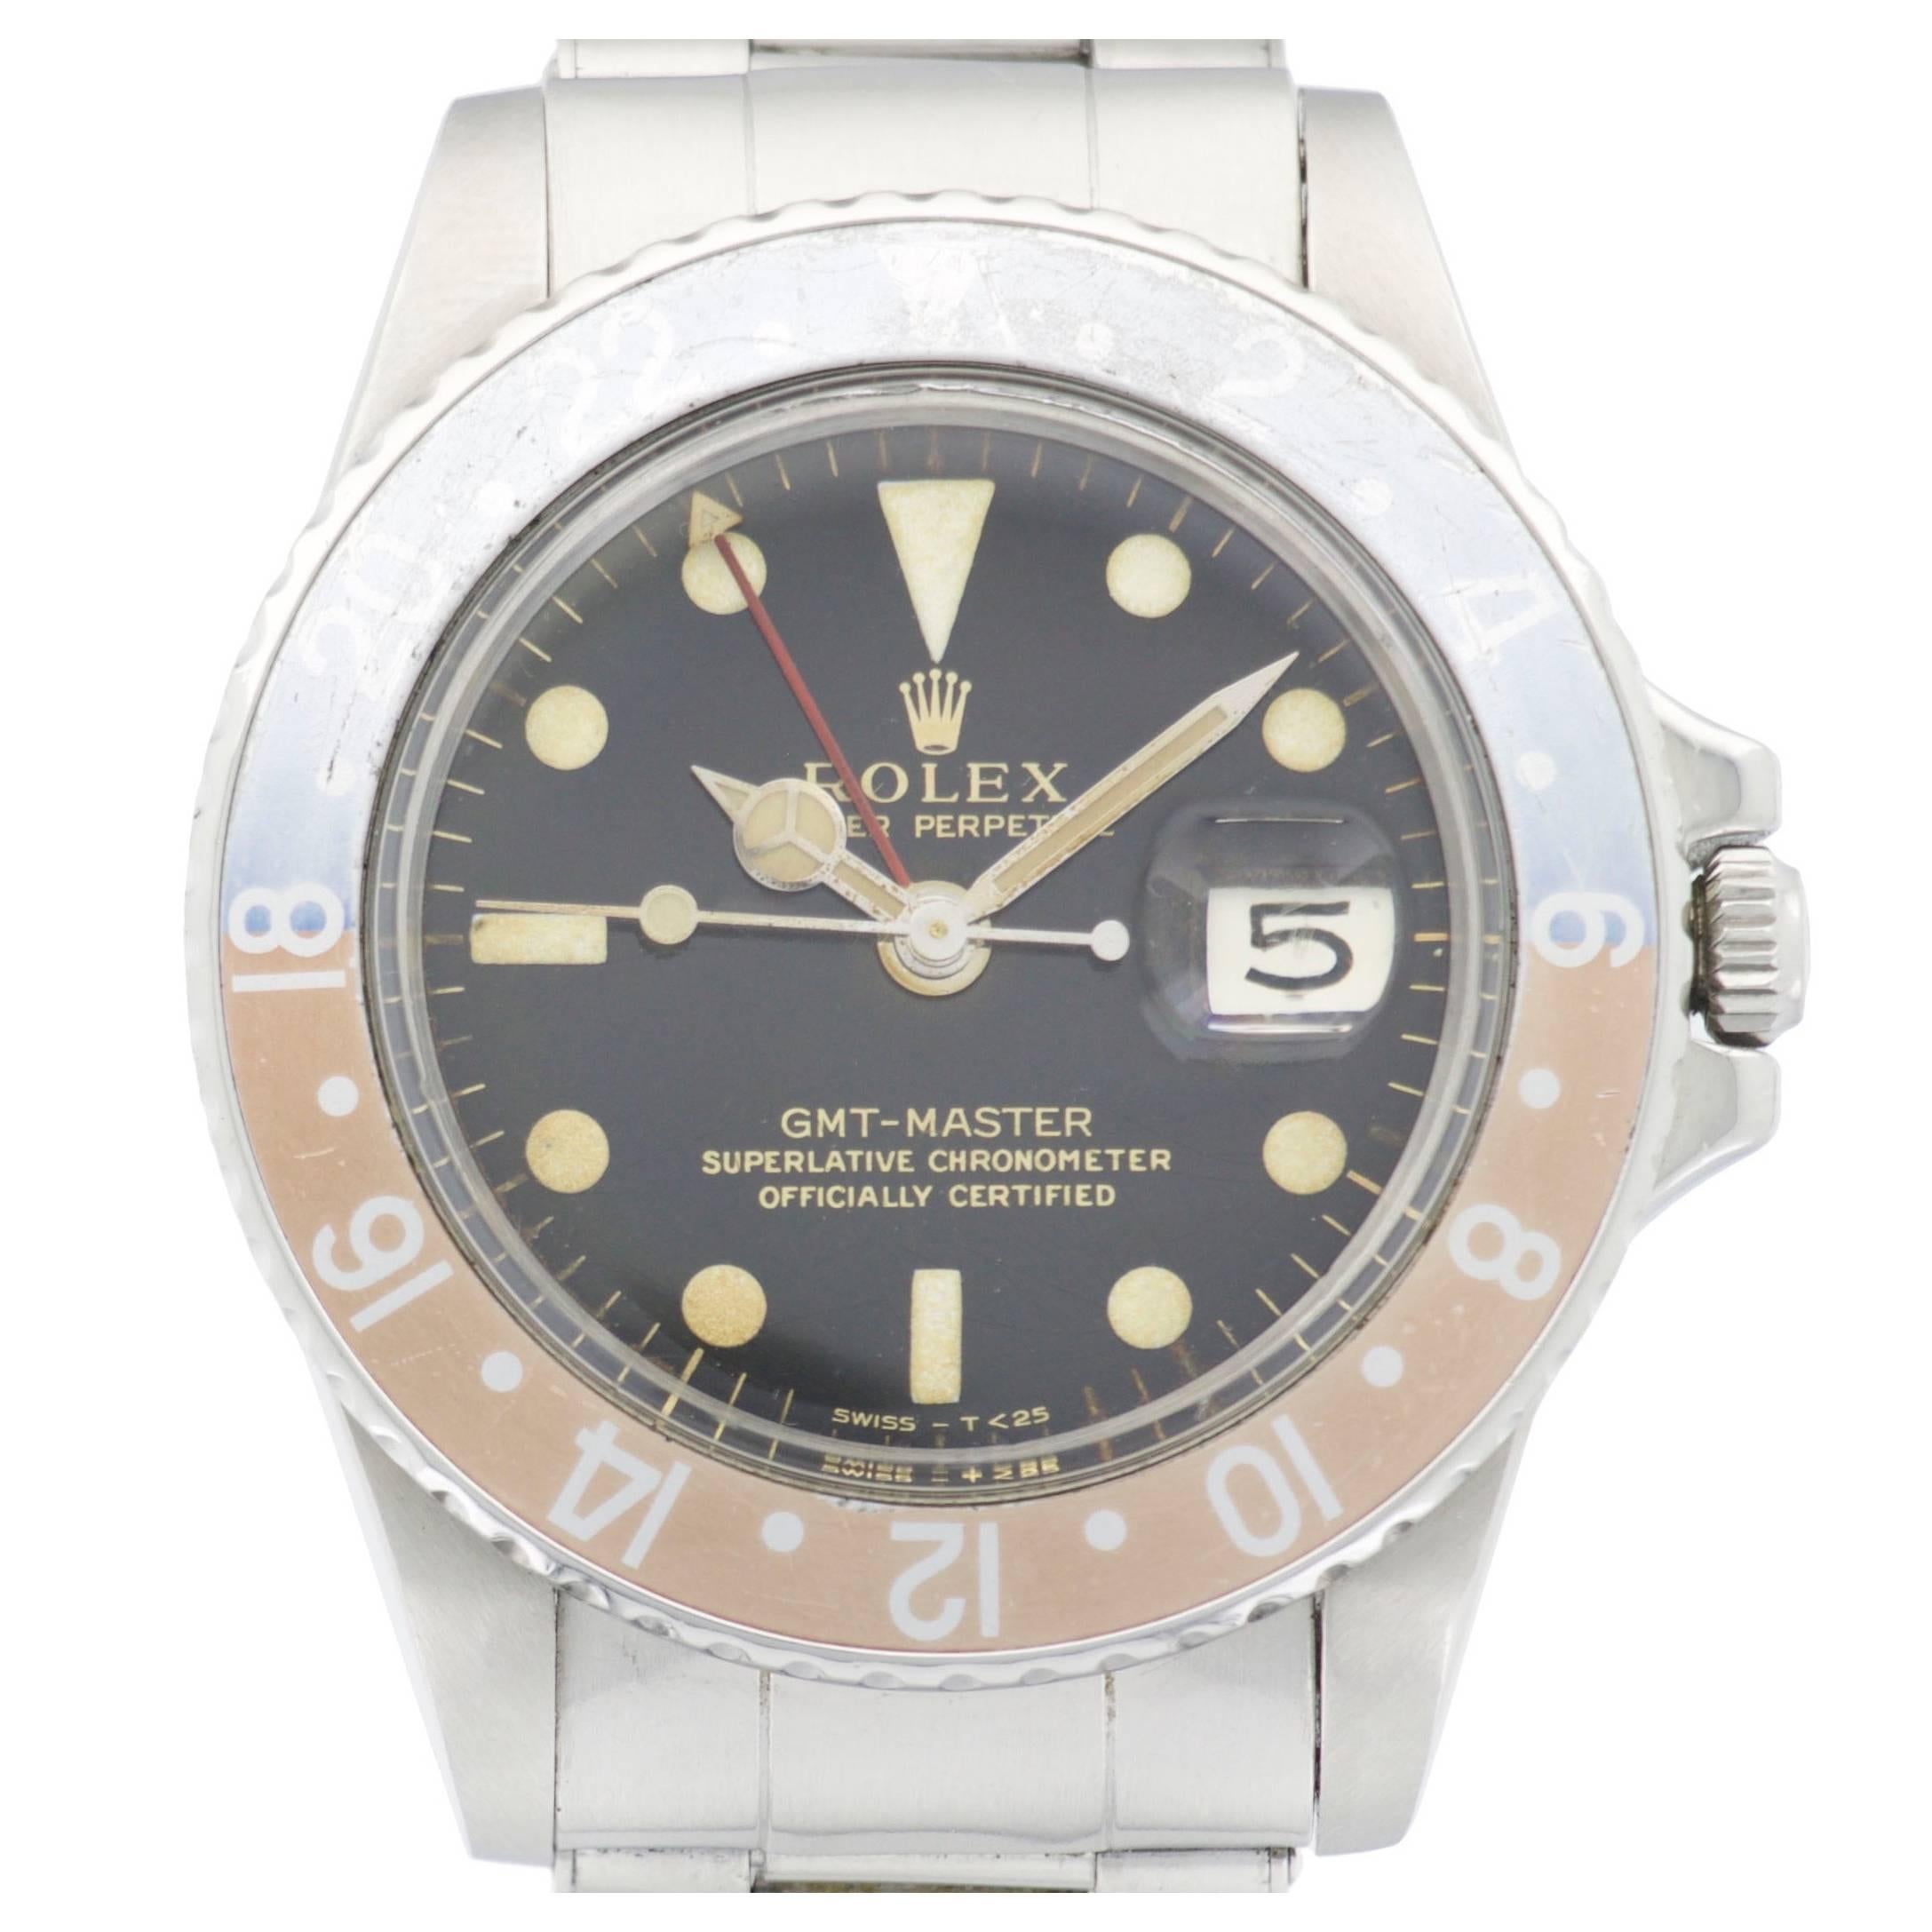 Rolex Stainless Steel Gilt Dial GMT-Master Wristwatch Ref 1675 